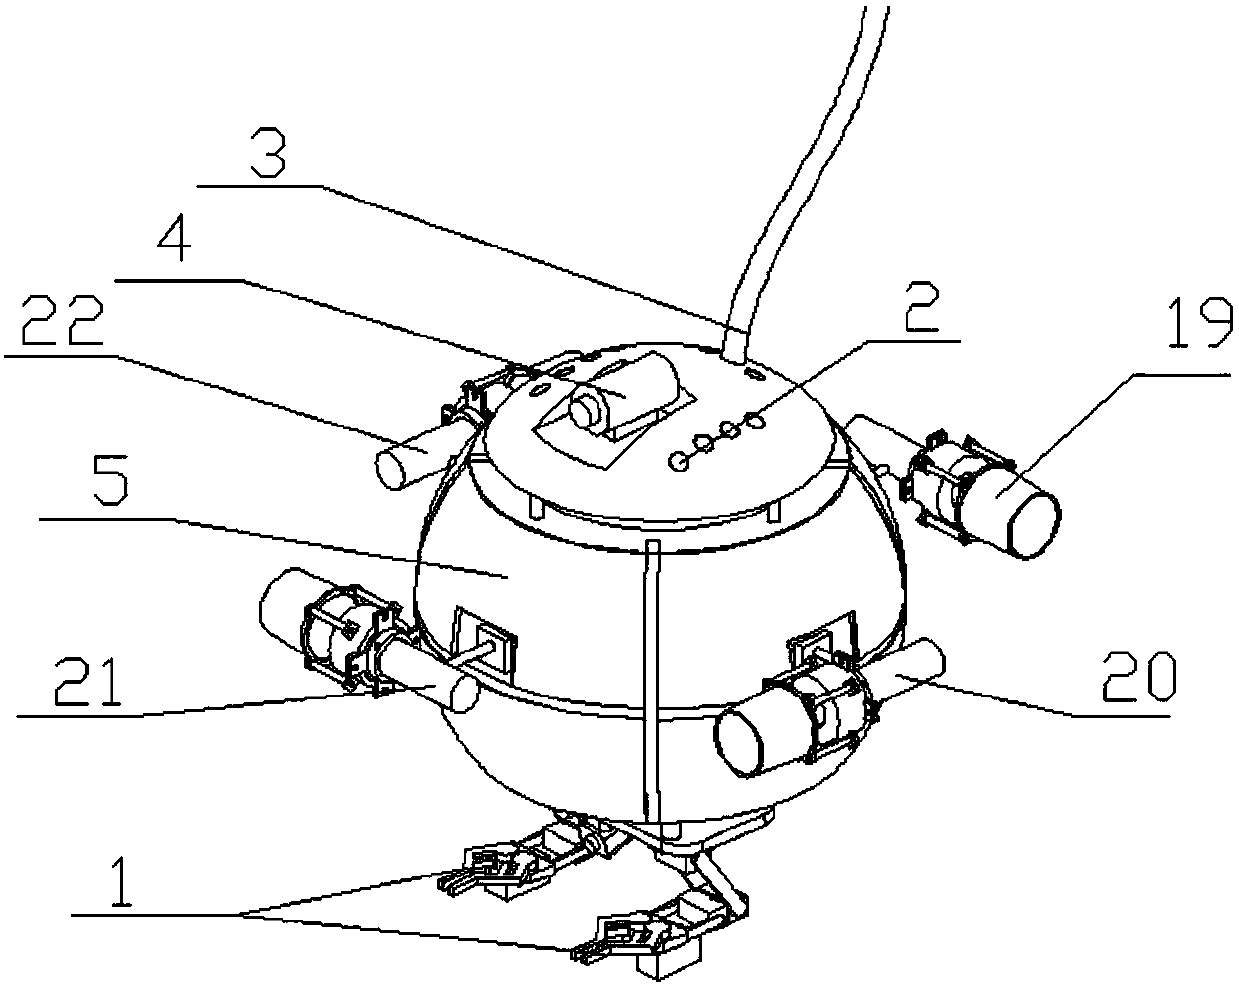 Spherical underwater robot based on vector advancing